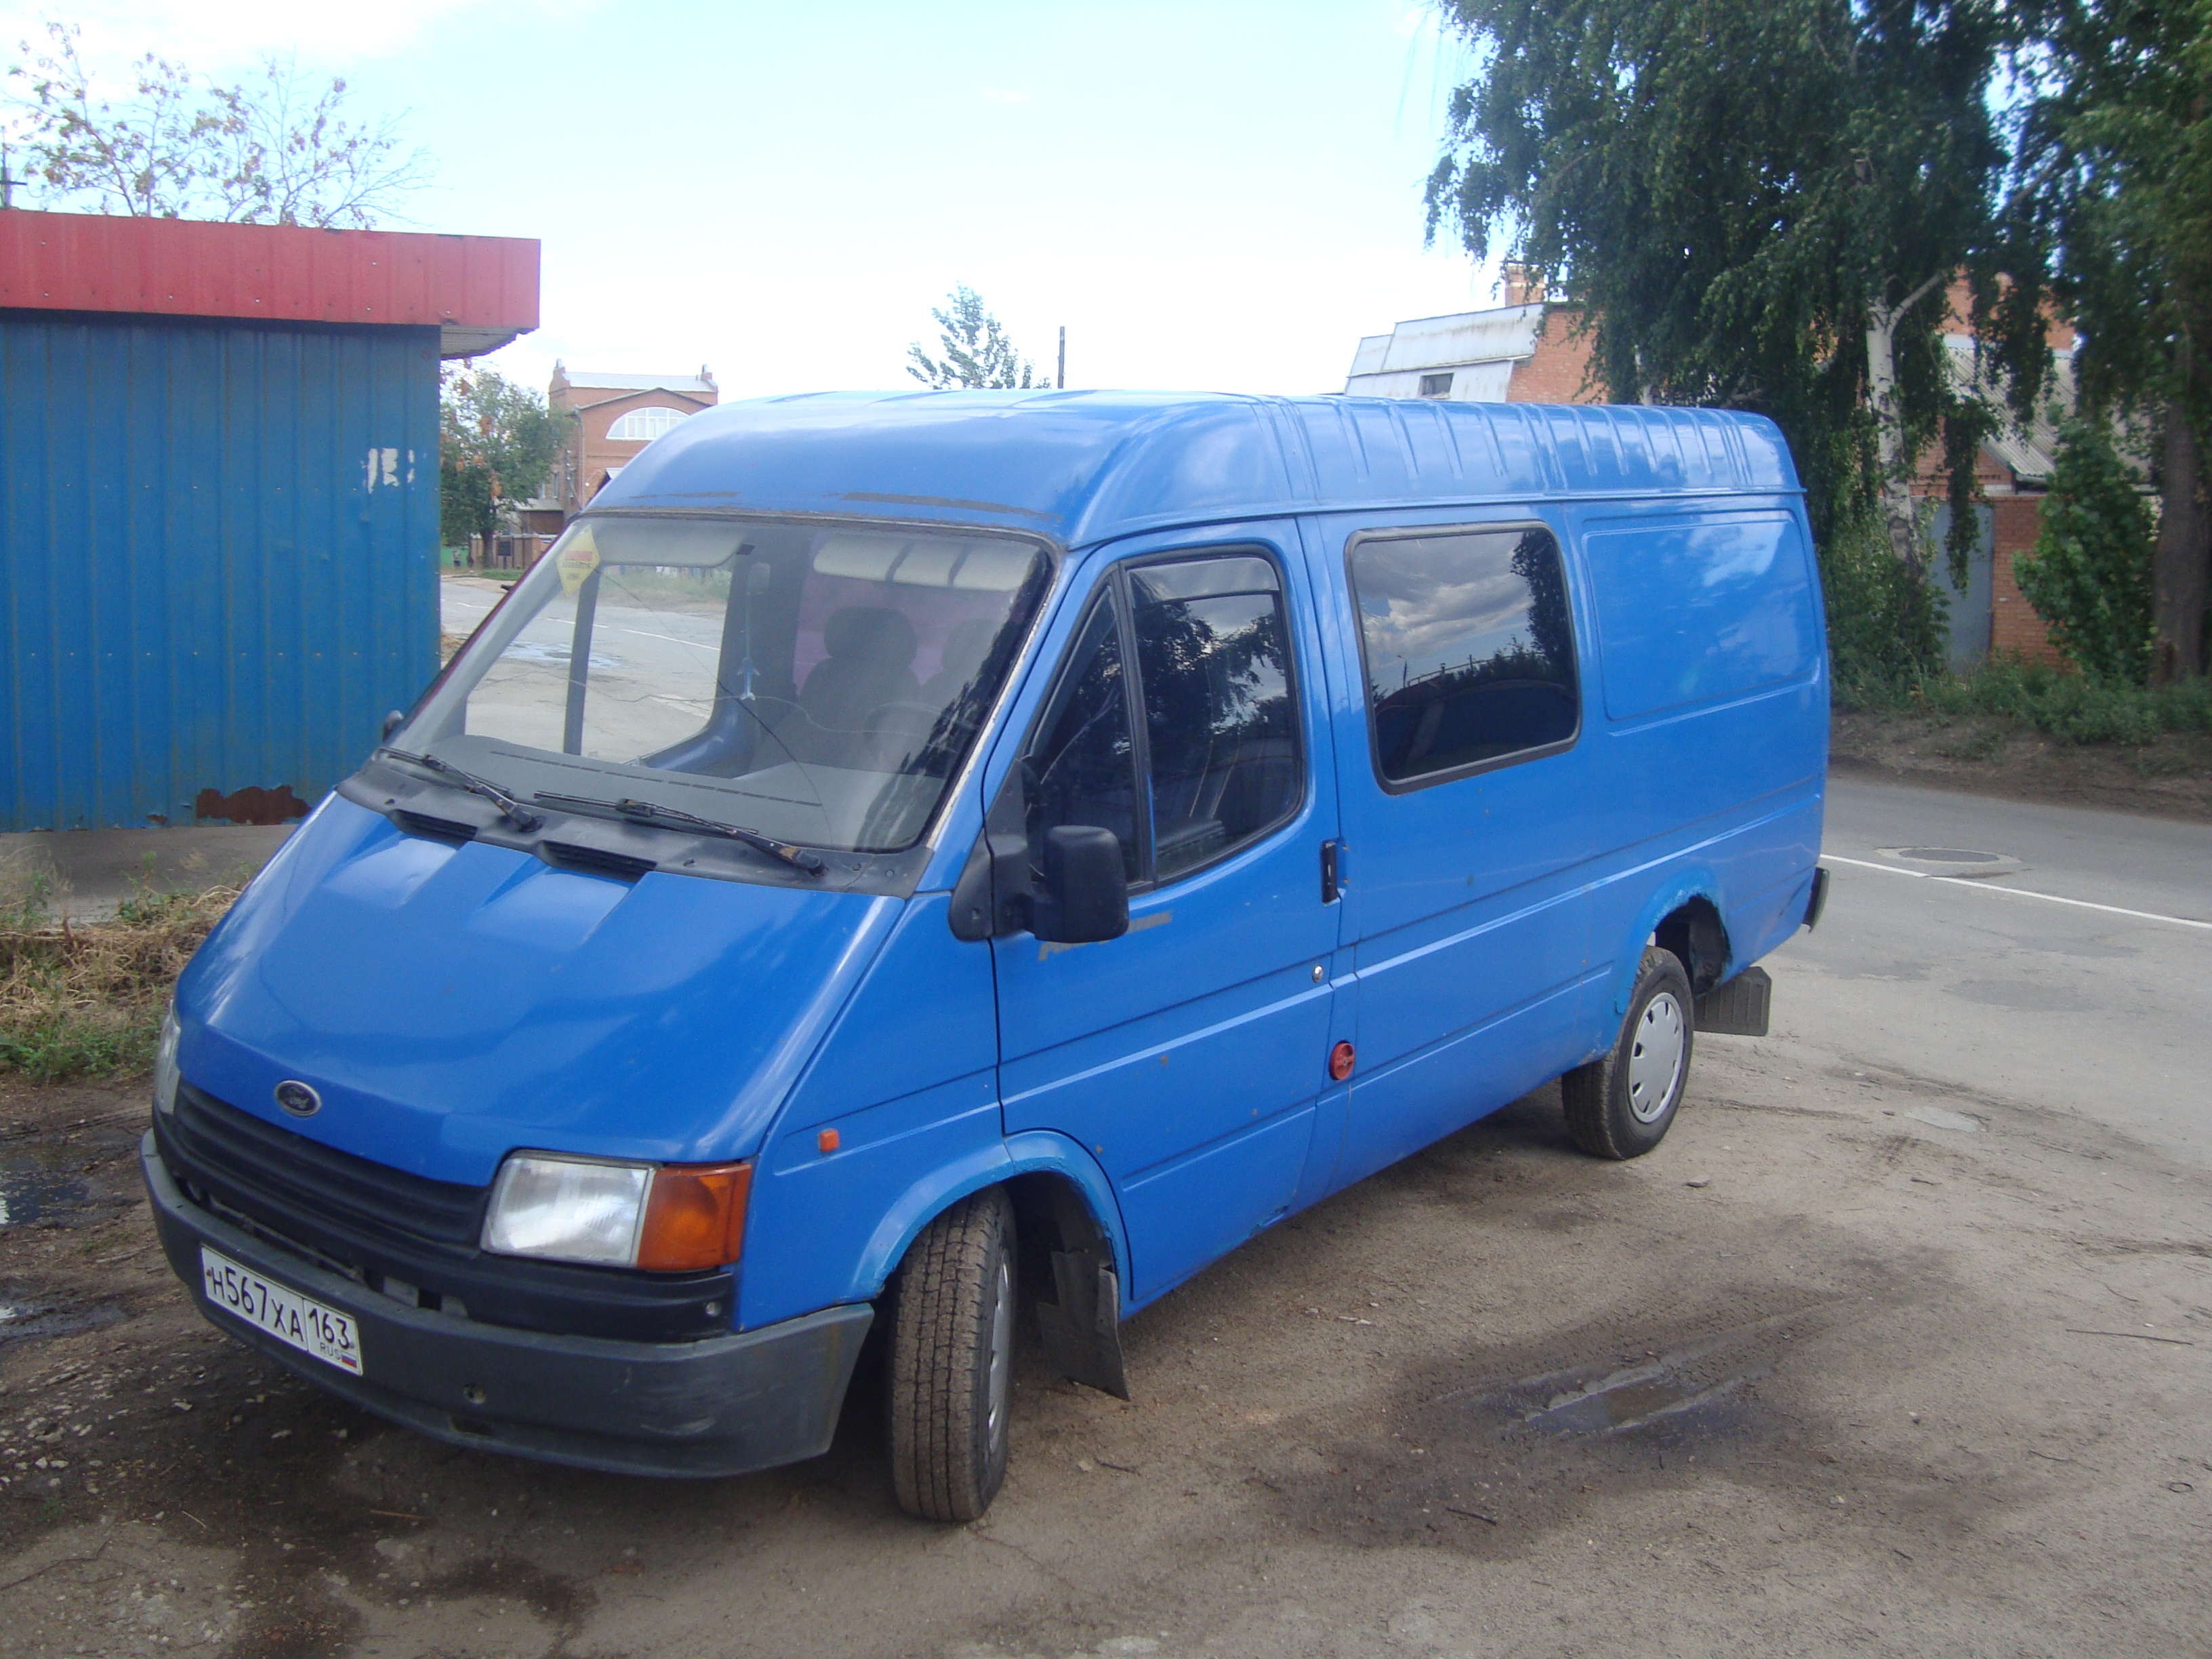 Ford Transit, 1989 купить в Санкт-Петербурге на Avito ...